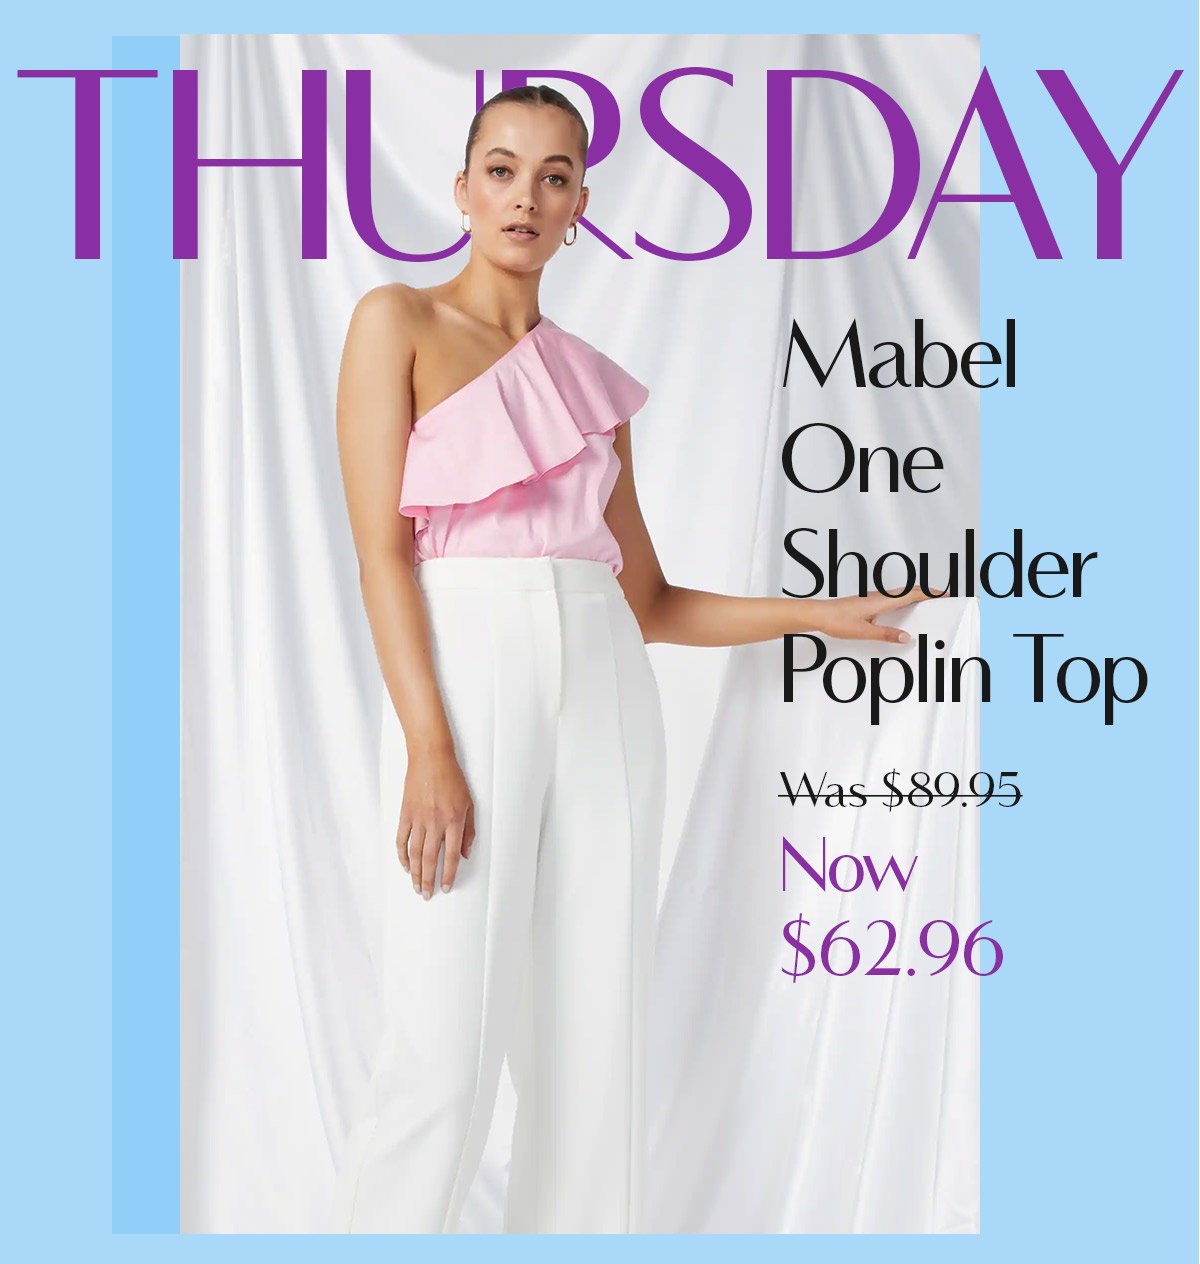 Mabel One Shoulder Poplin Top Was $89.95 Now $62.96